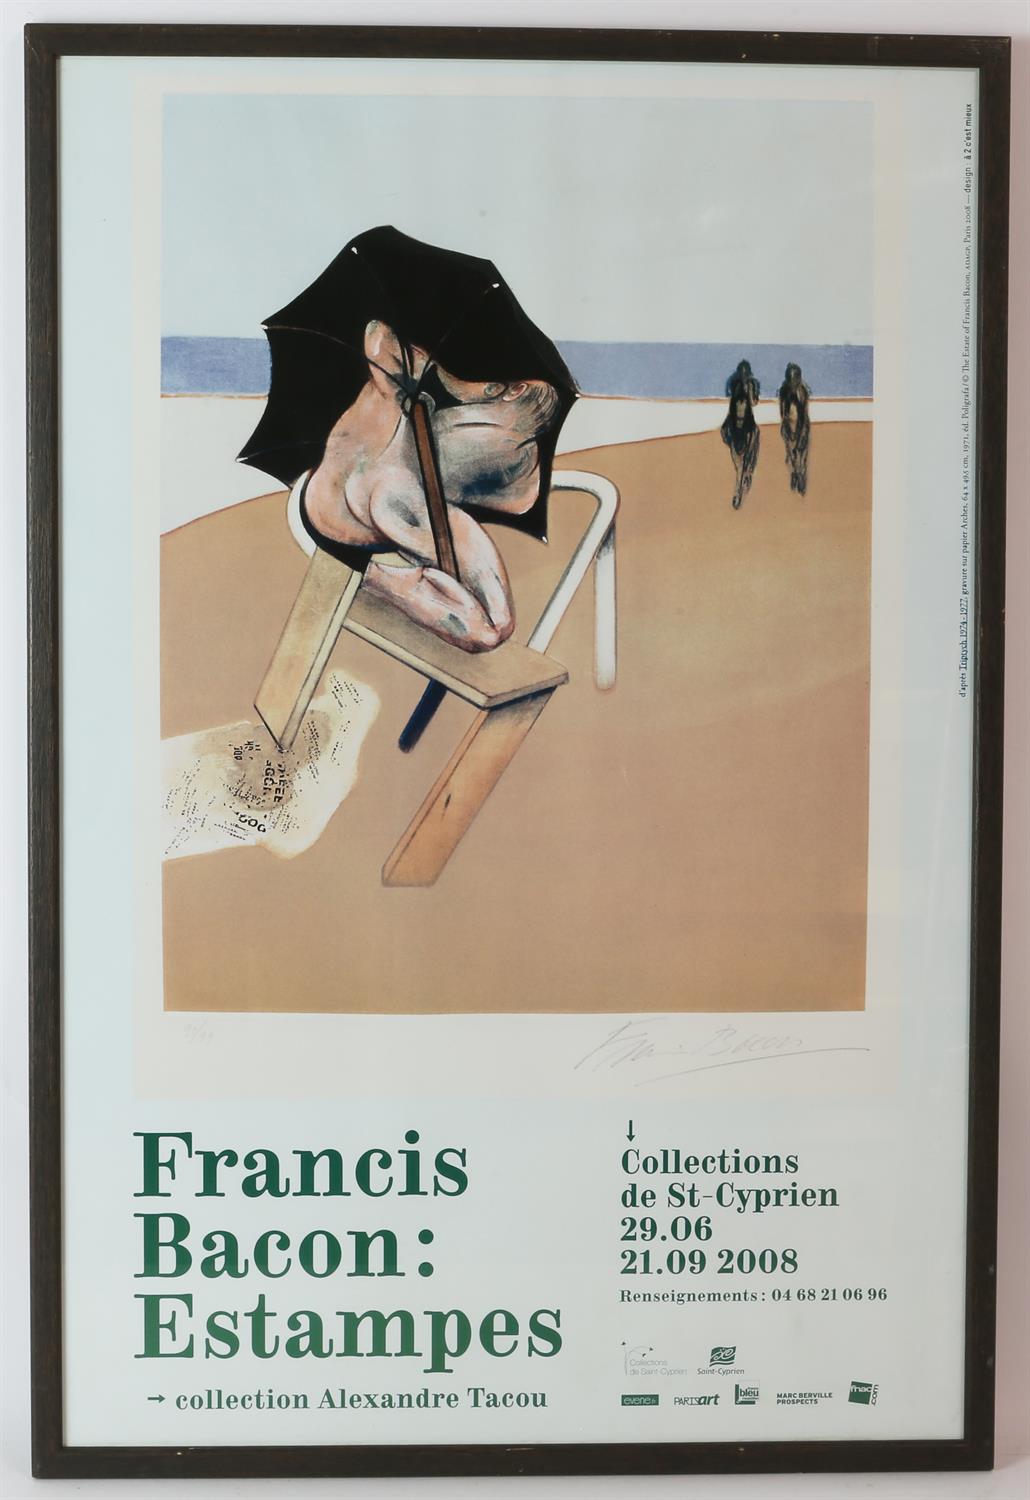 'Francis Bacon: Estampes, collection Alexandre Tacou' (2008), exhibition poster, 59 x 39cm, - Image 2 of 2